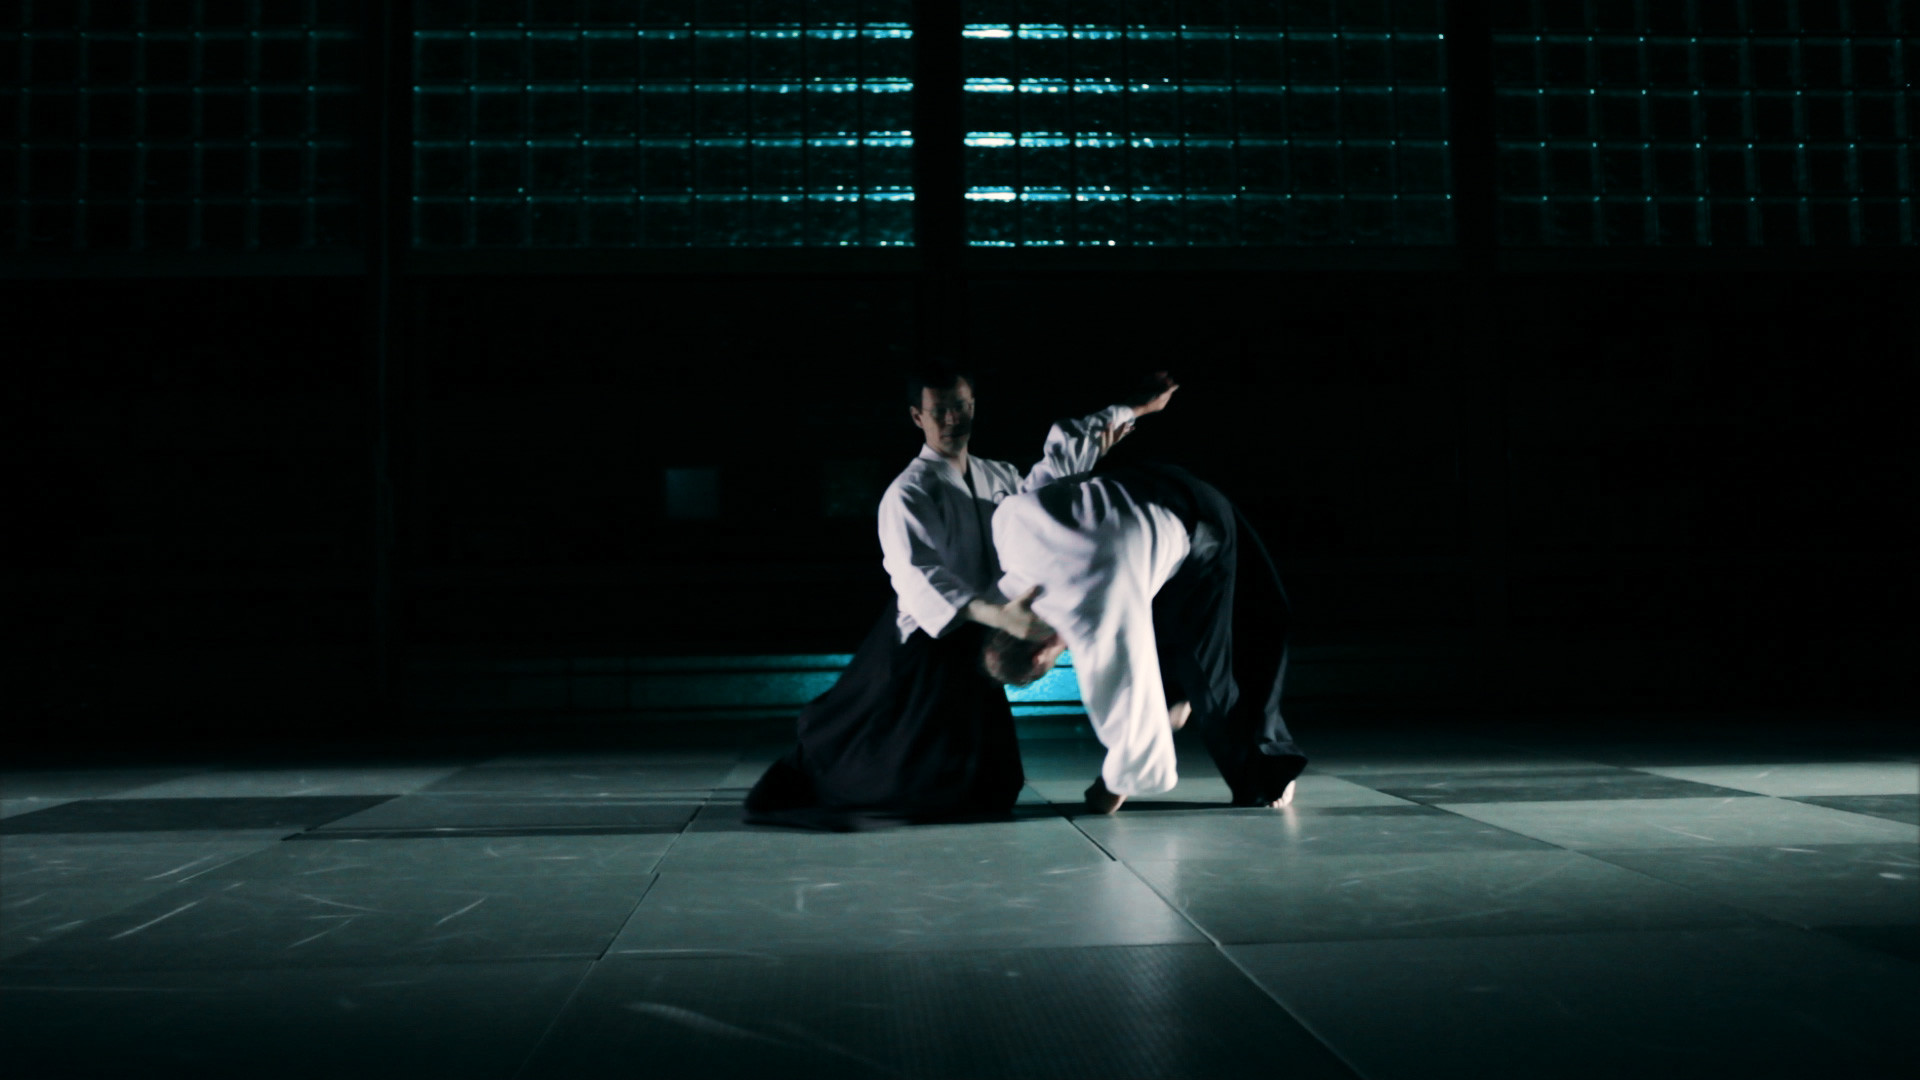 fond d'écran d'aikido,aikido,art de la performance,danse moderne,performance,étape